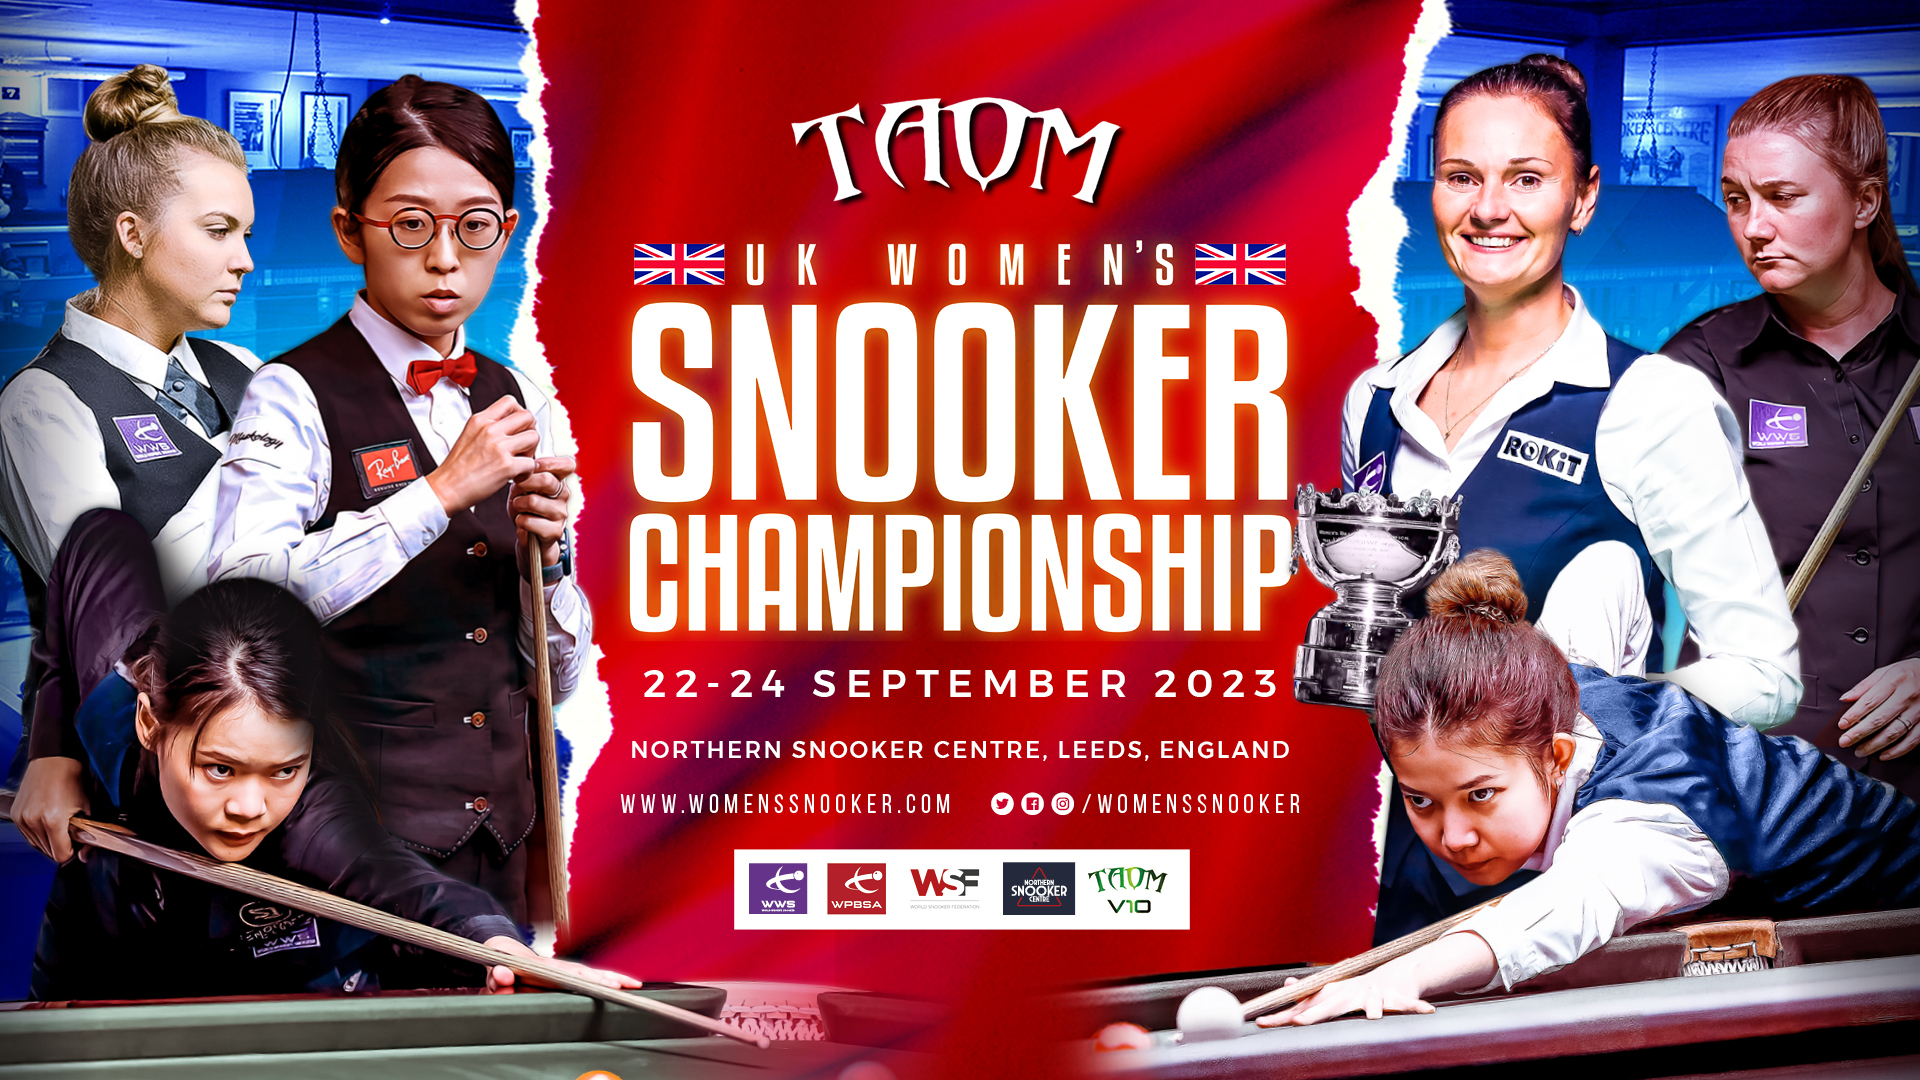 Taom UK Womens Snooker Championship 2023 Enter Now